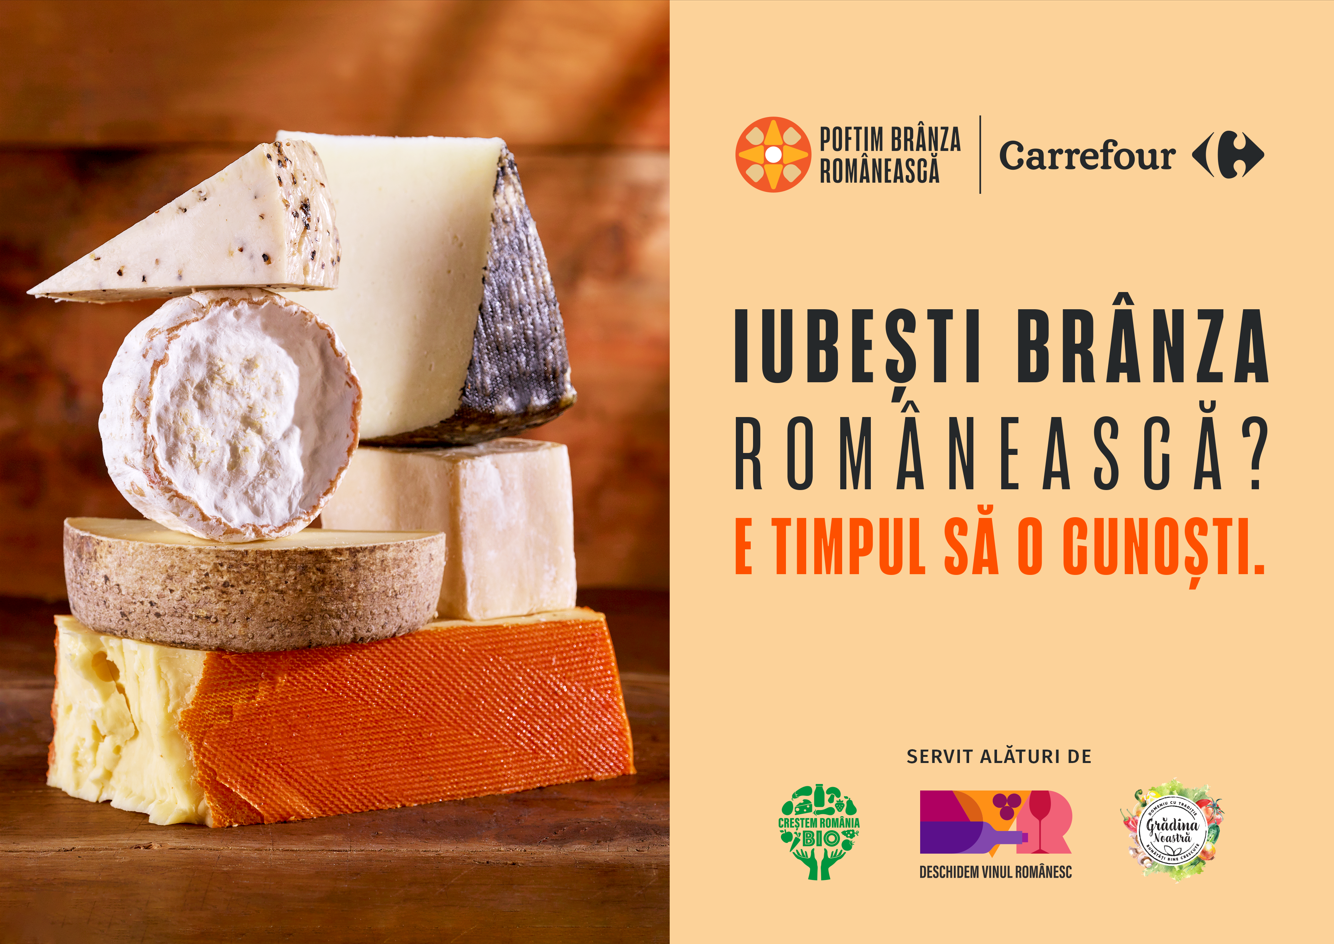 Poftim Branza Romaneasca_Carrefour Romania